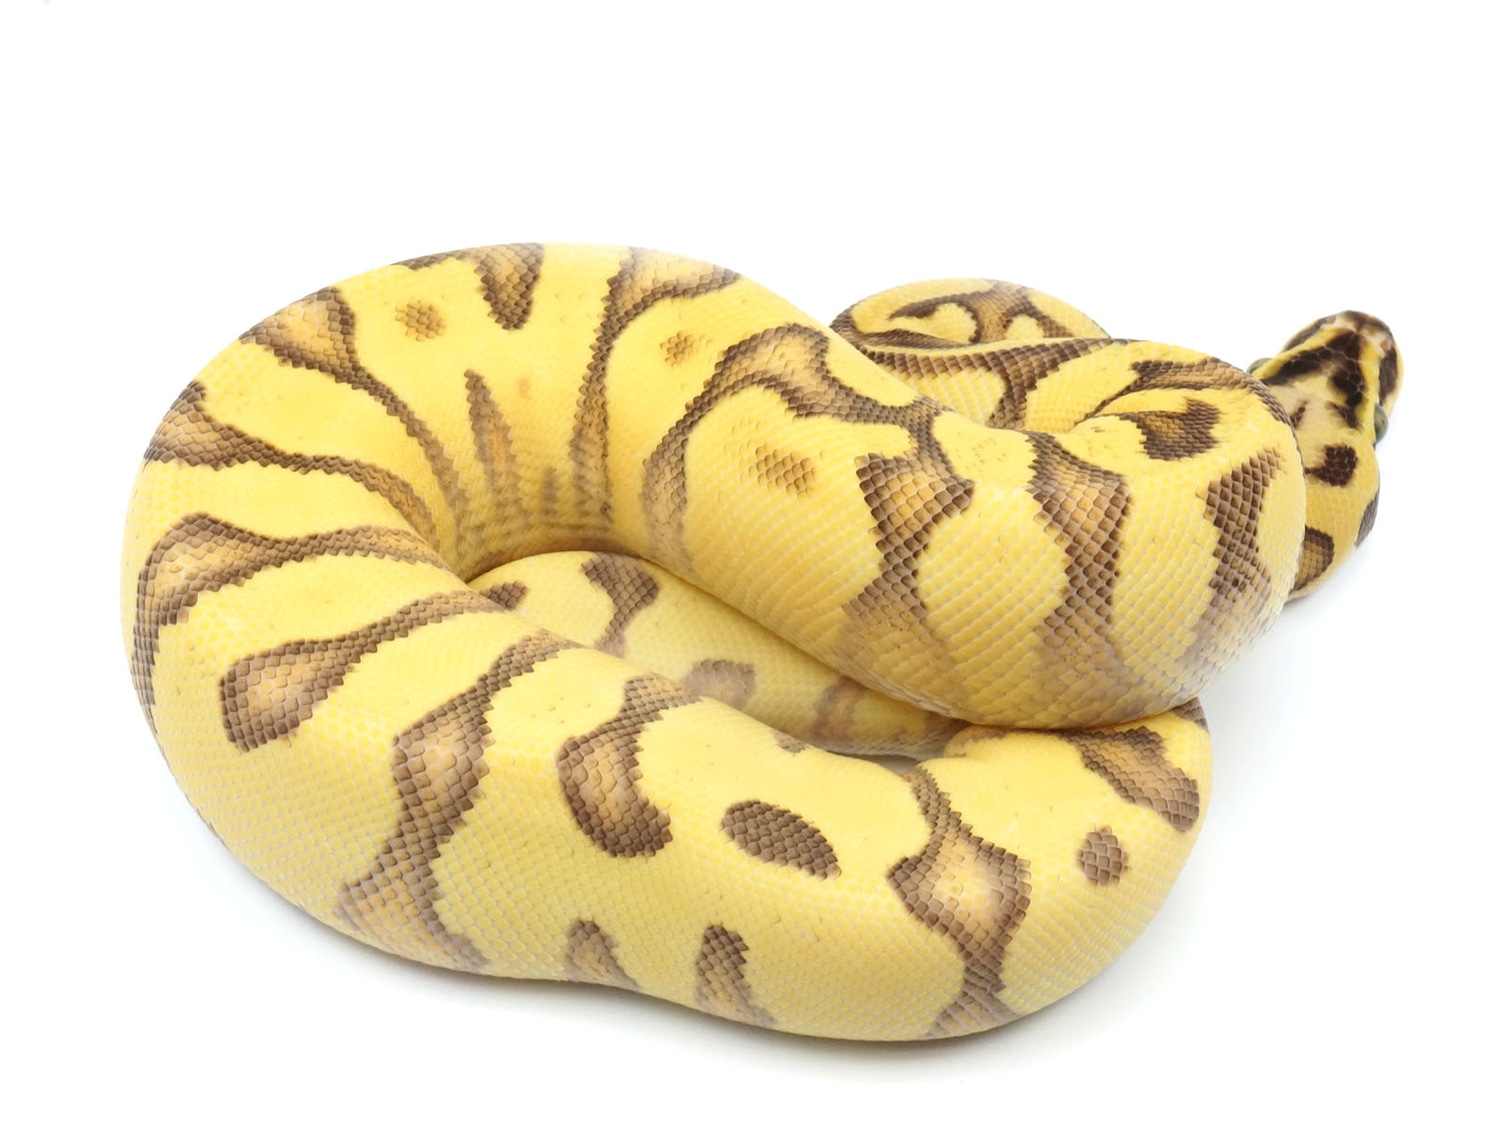 Pastel Enchi Yellowbelly Bald EMG ++ Ball Python by New England Reptile Distributors